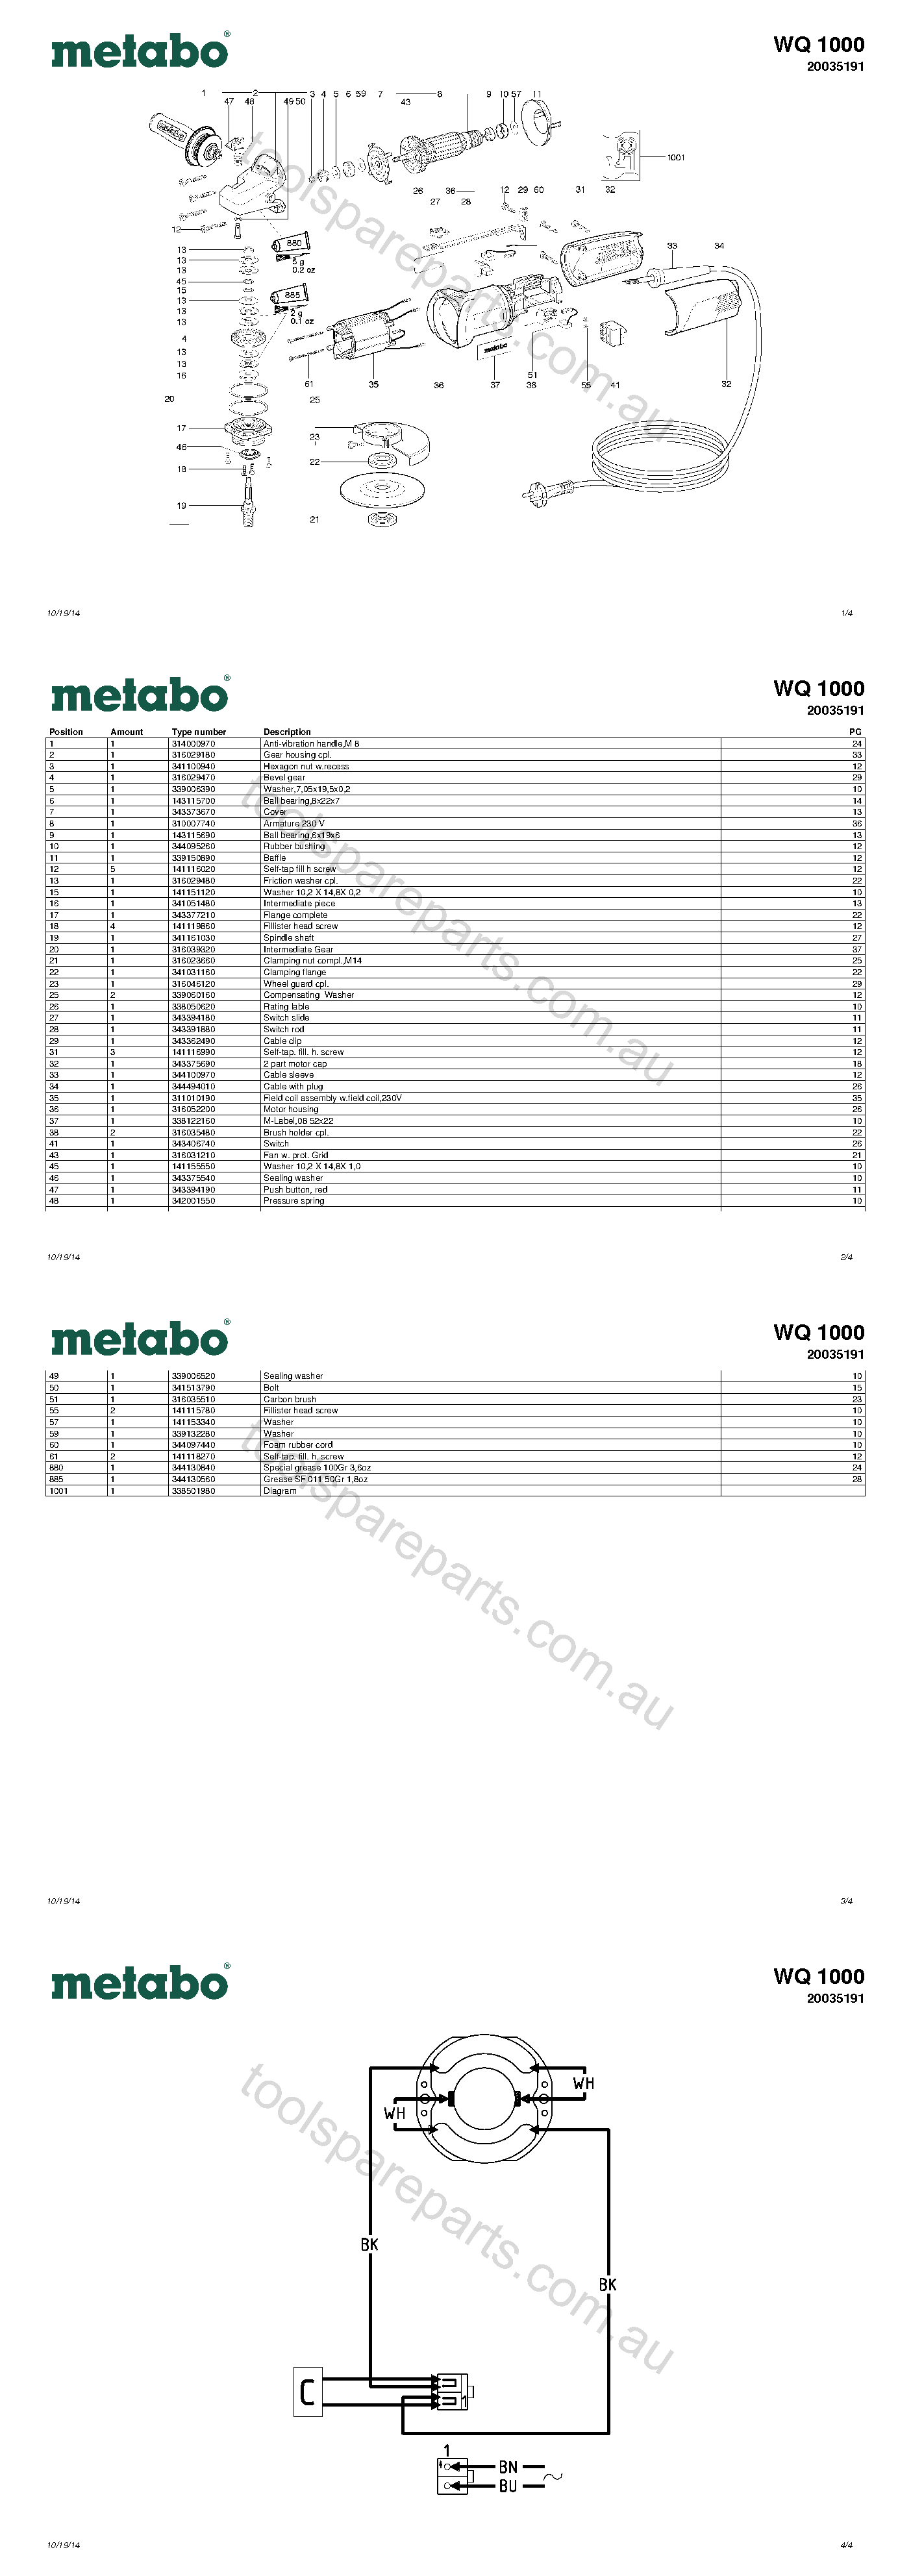 Metabo WQ 1000 20035191  Diagram 1